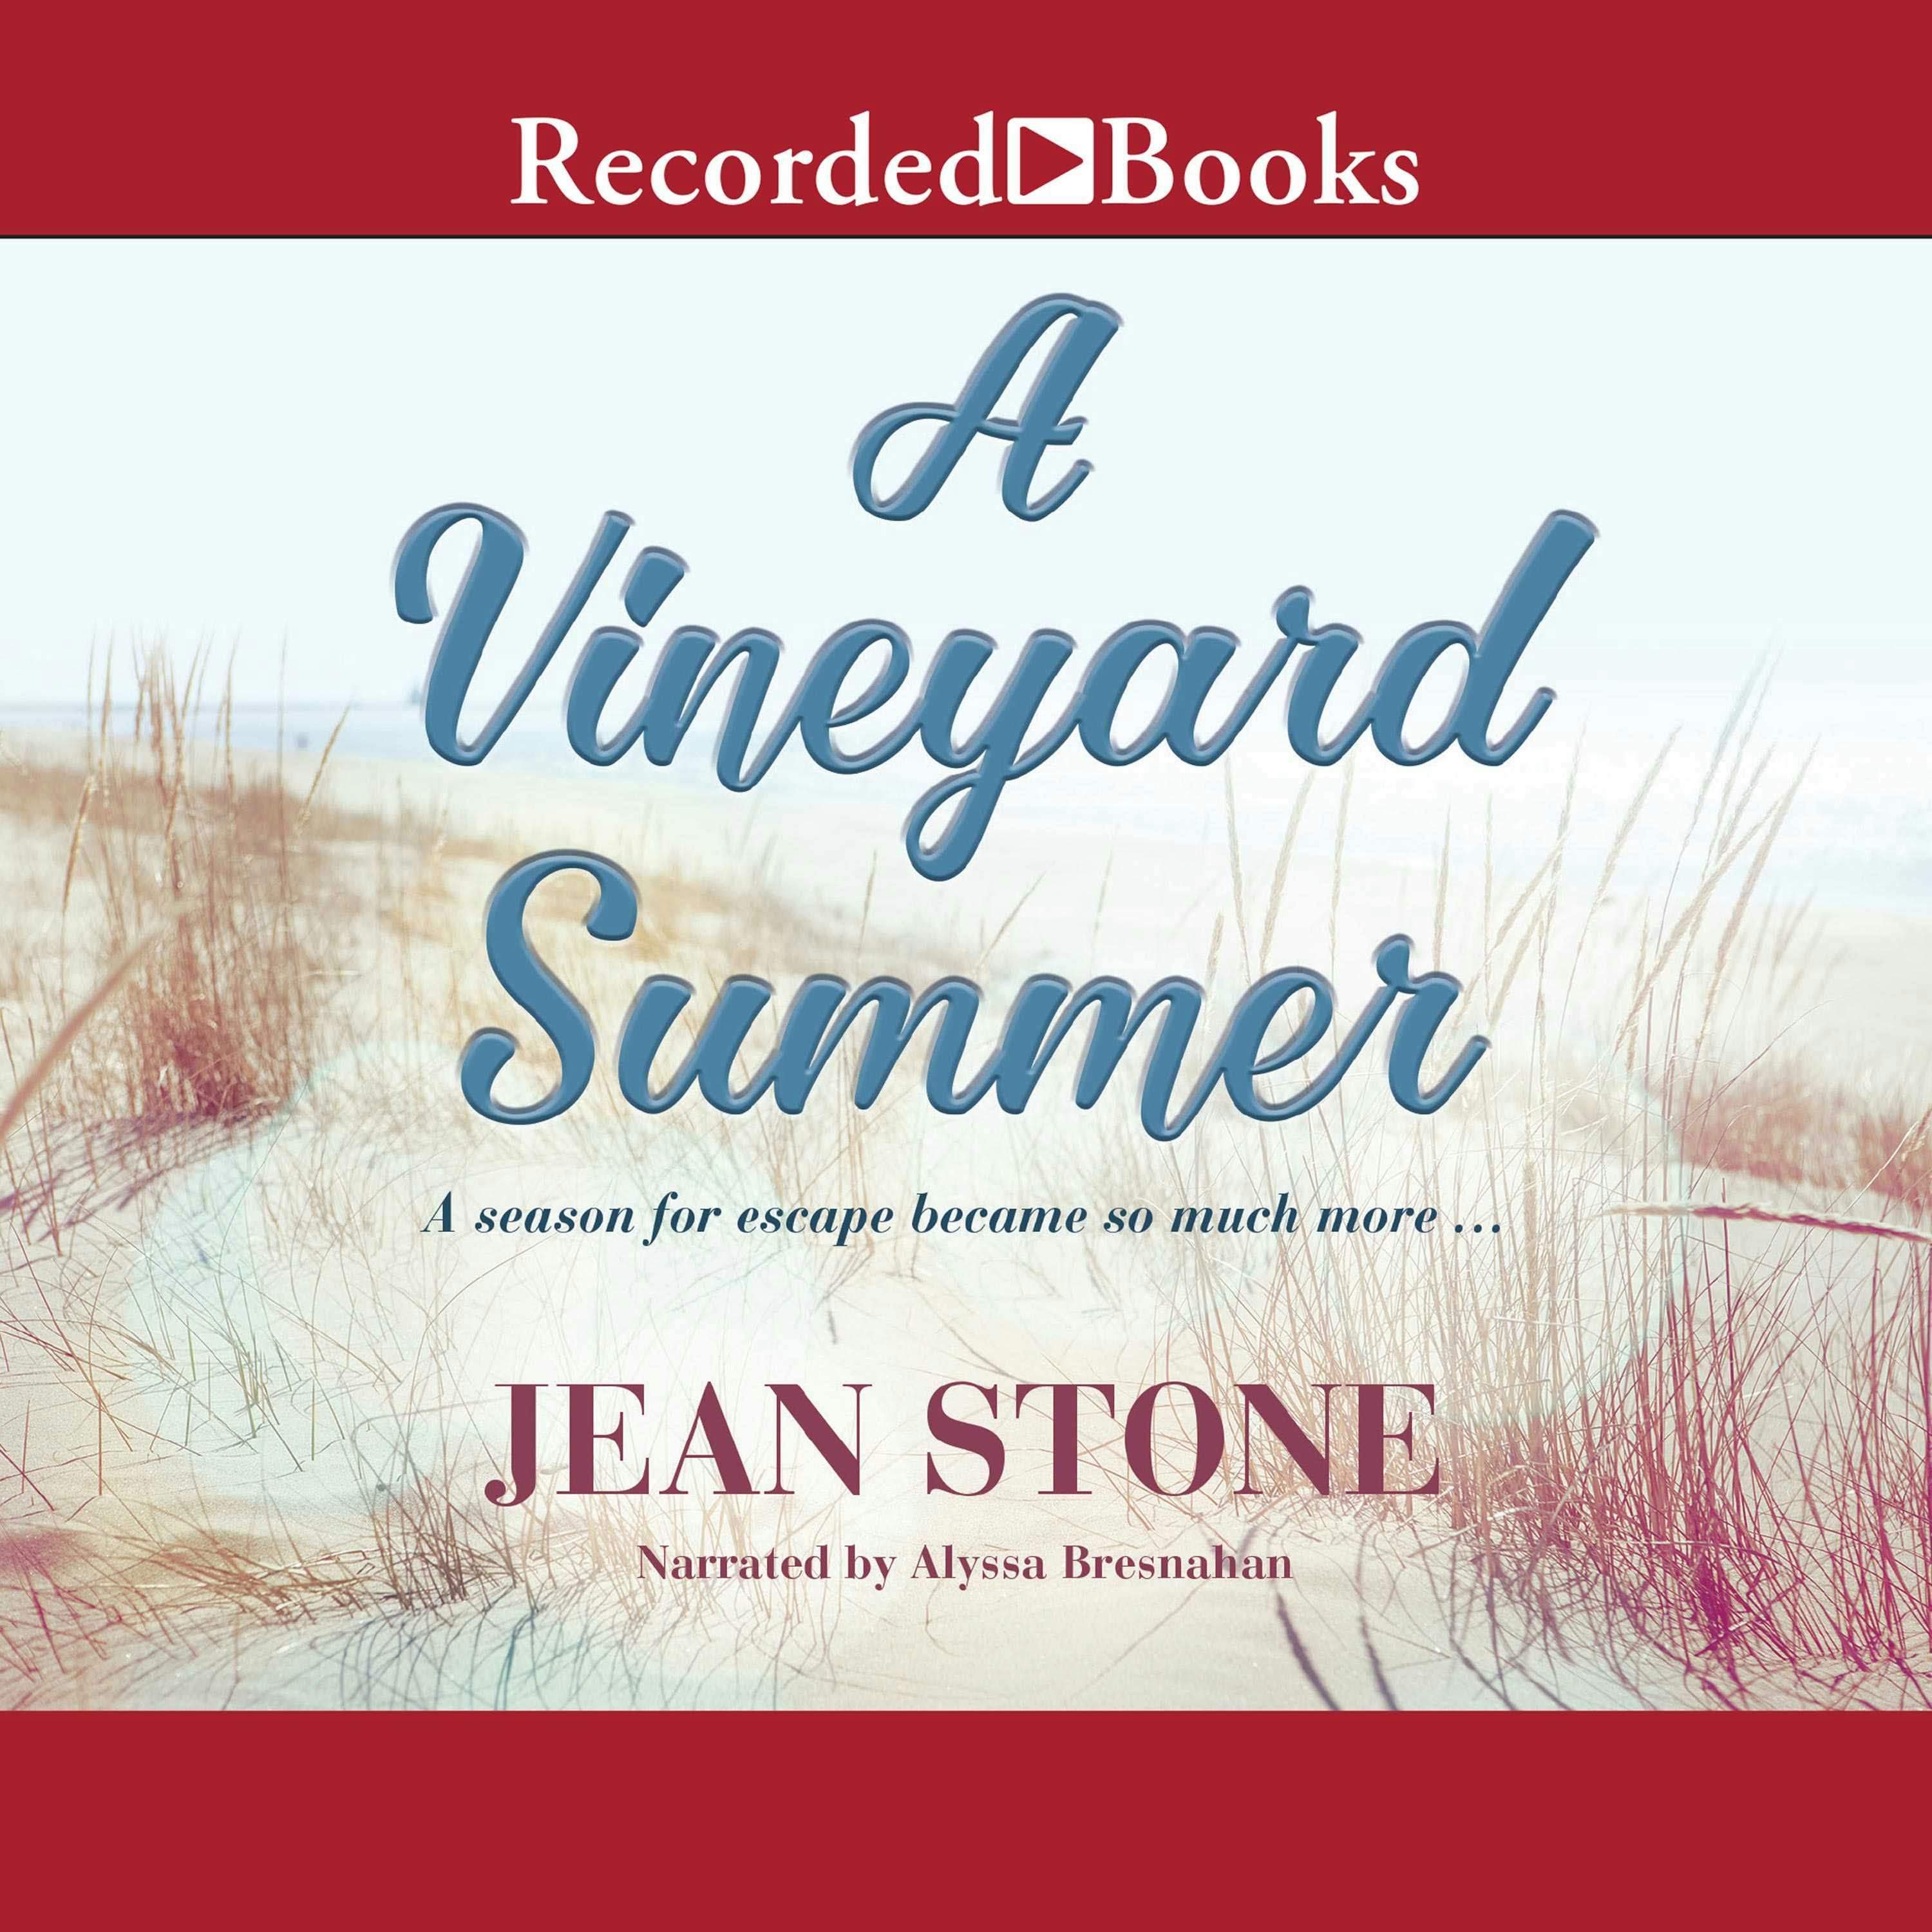 A Vineyard Summer - Jean Stone